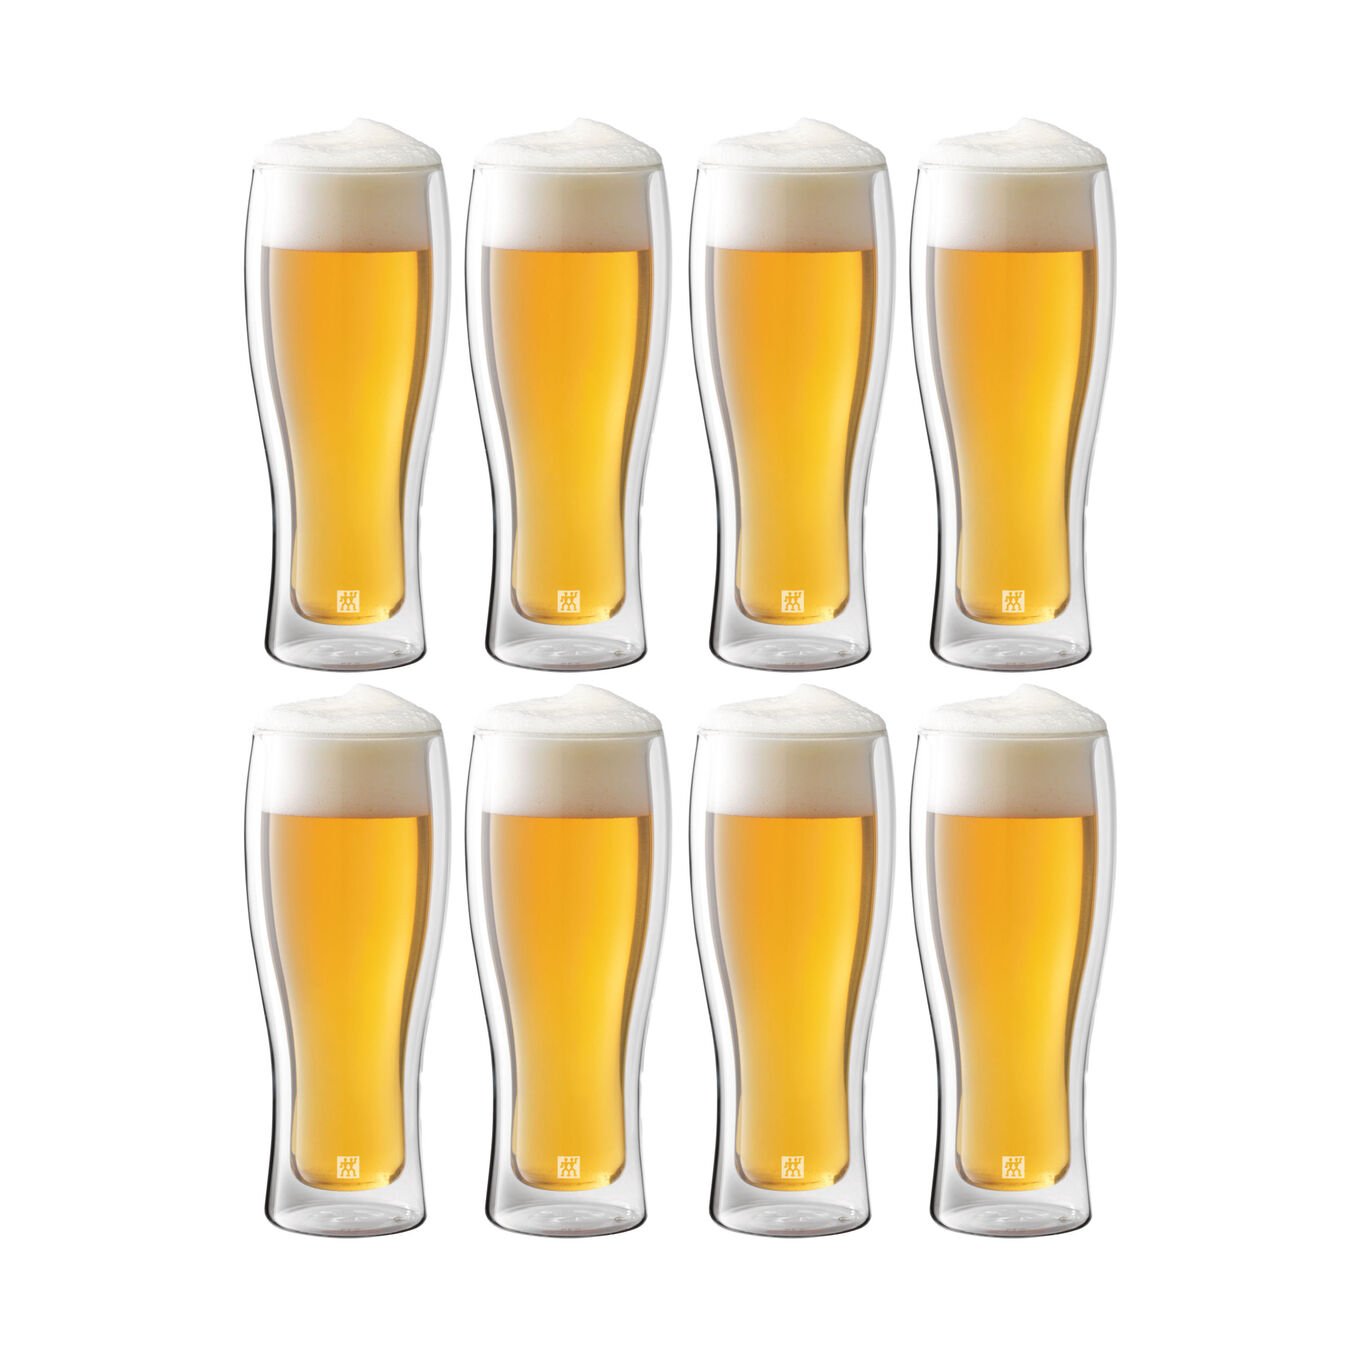 8 Piece Beer Glass Set - Value Pack,,large 2